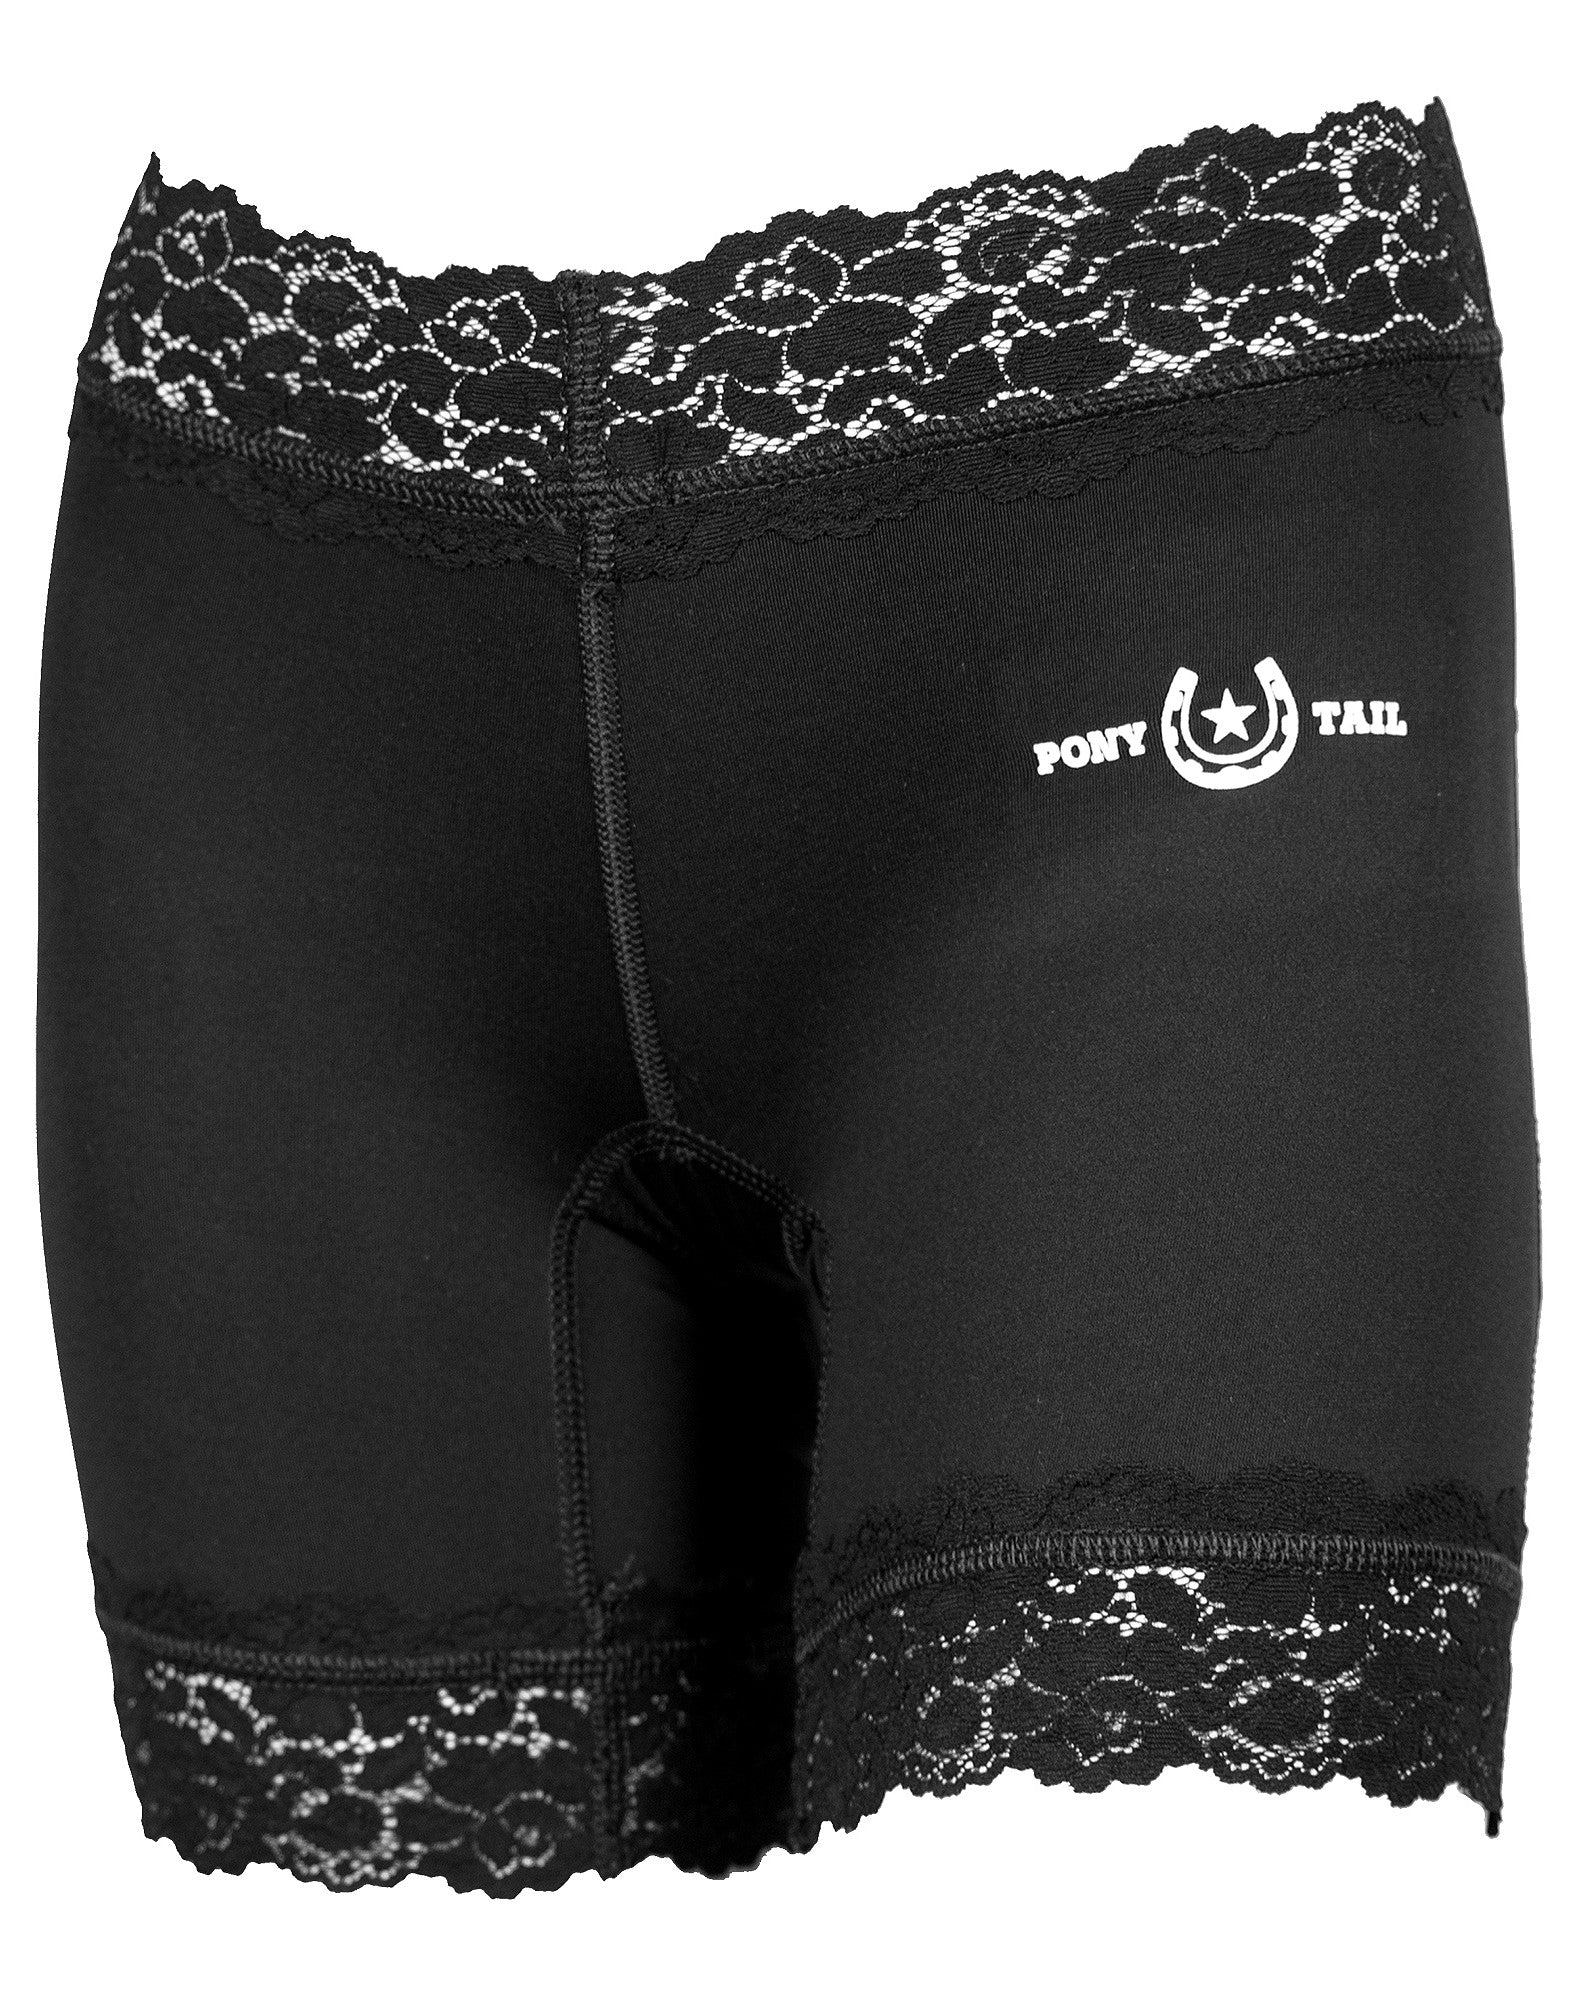 "Not Quite Perfect" Women's AIP Sport Underwear Black